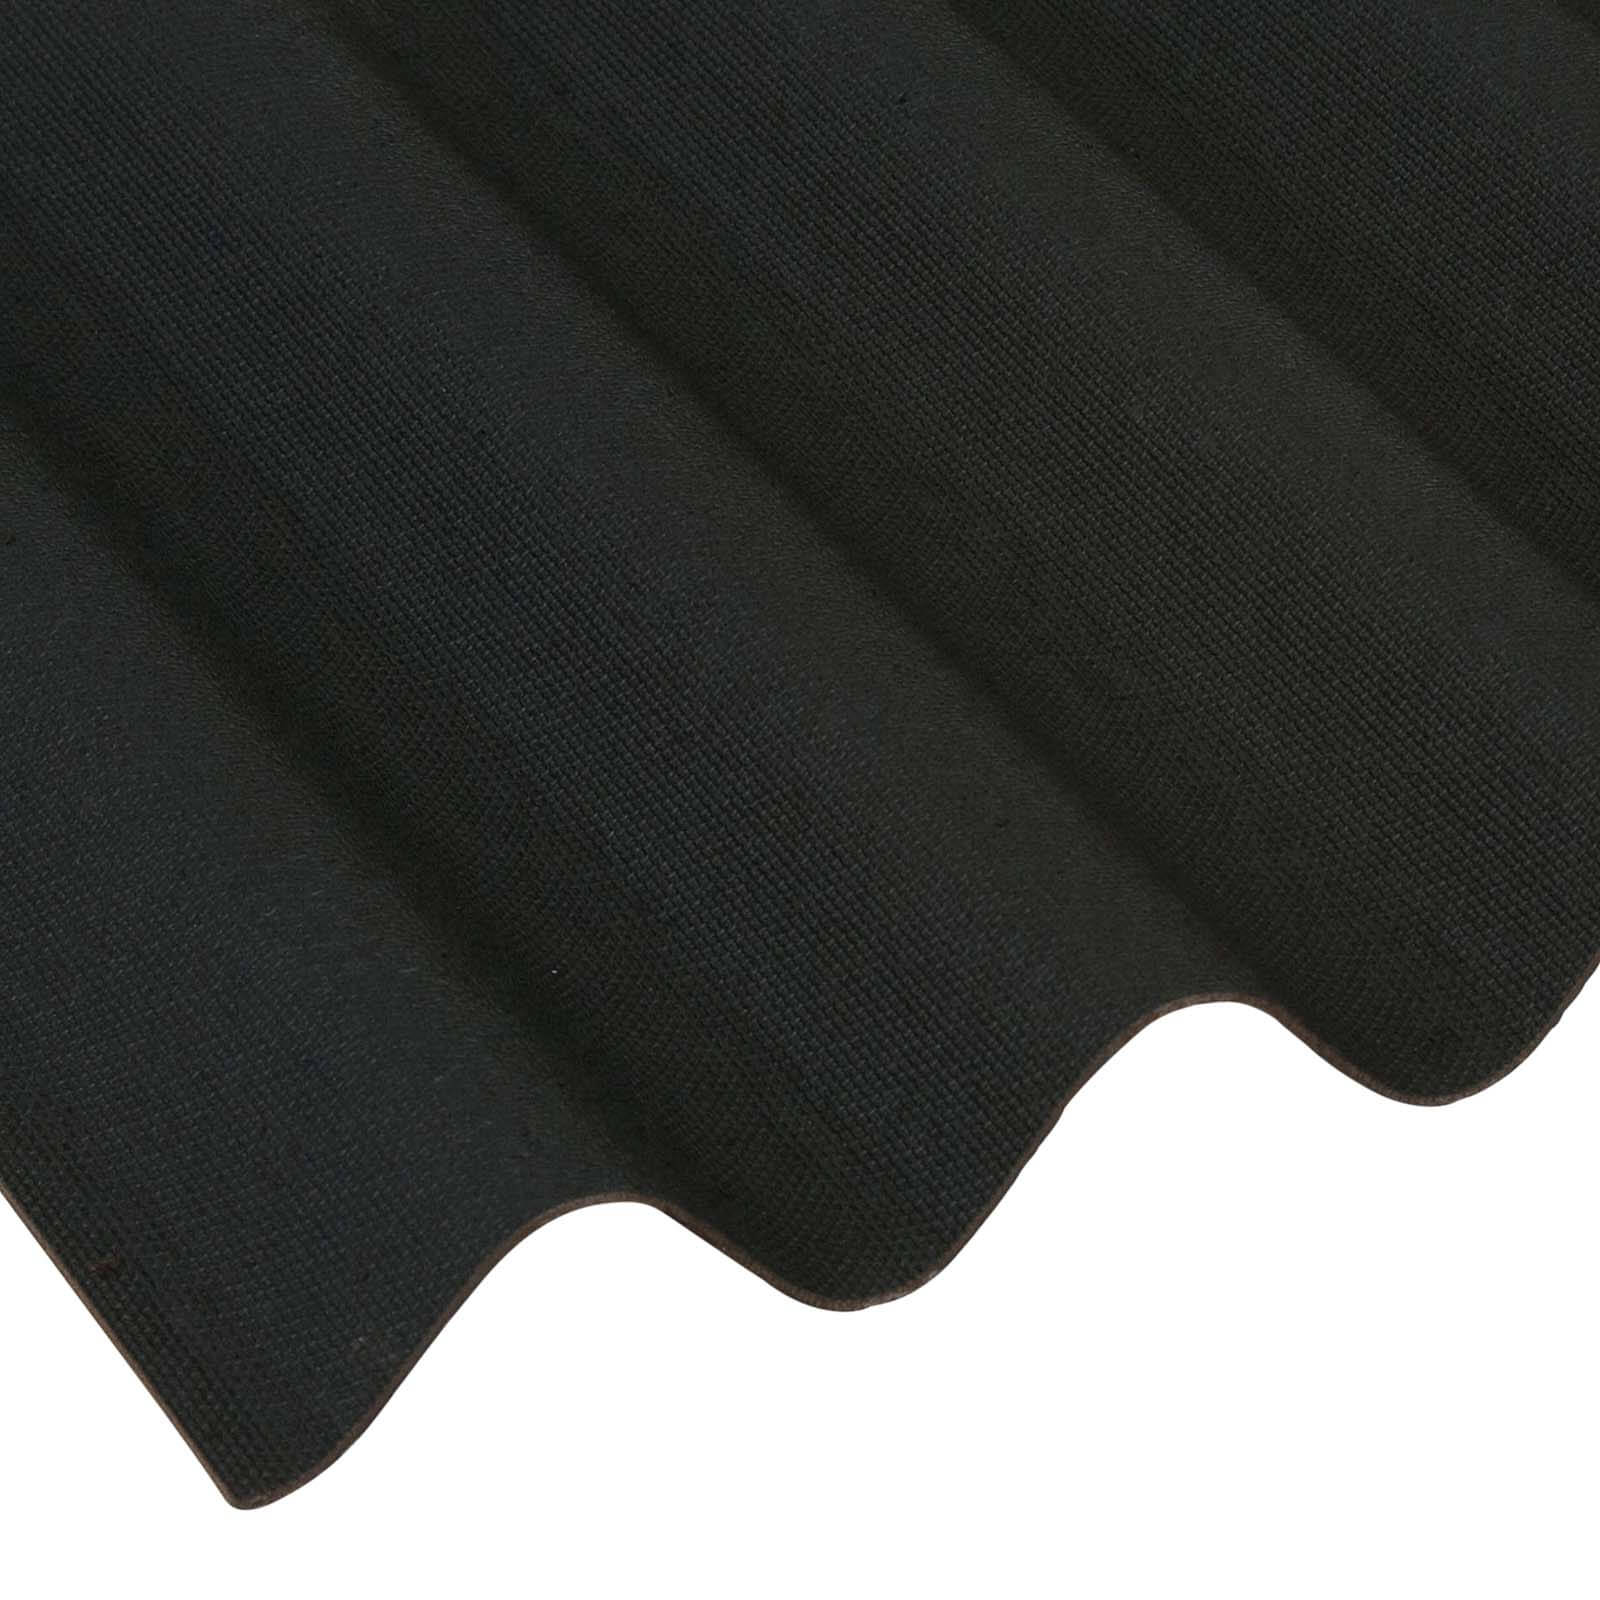 Photo of Coroline Black Roof Sheet 2m - Pack 5